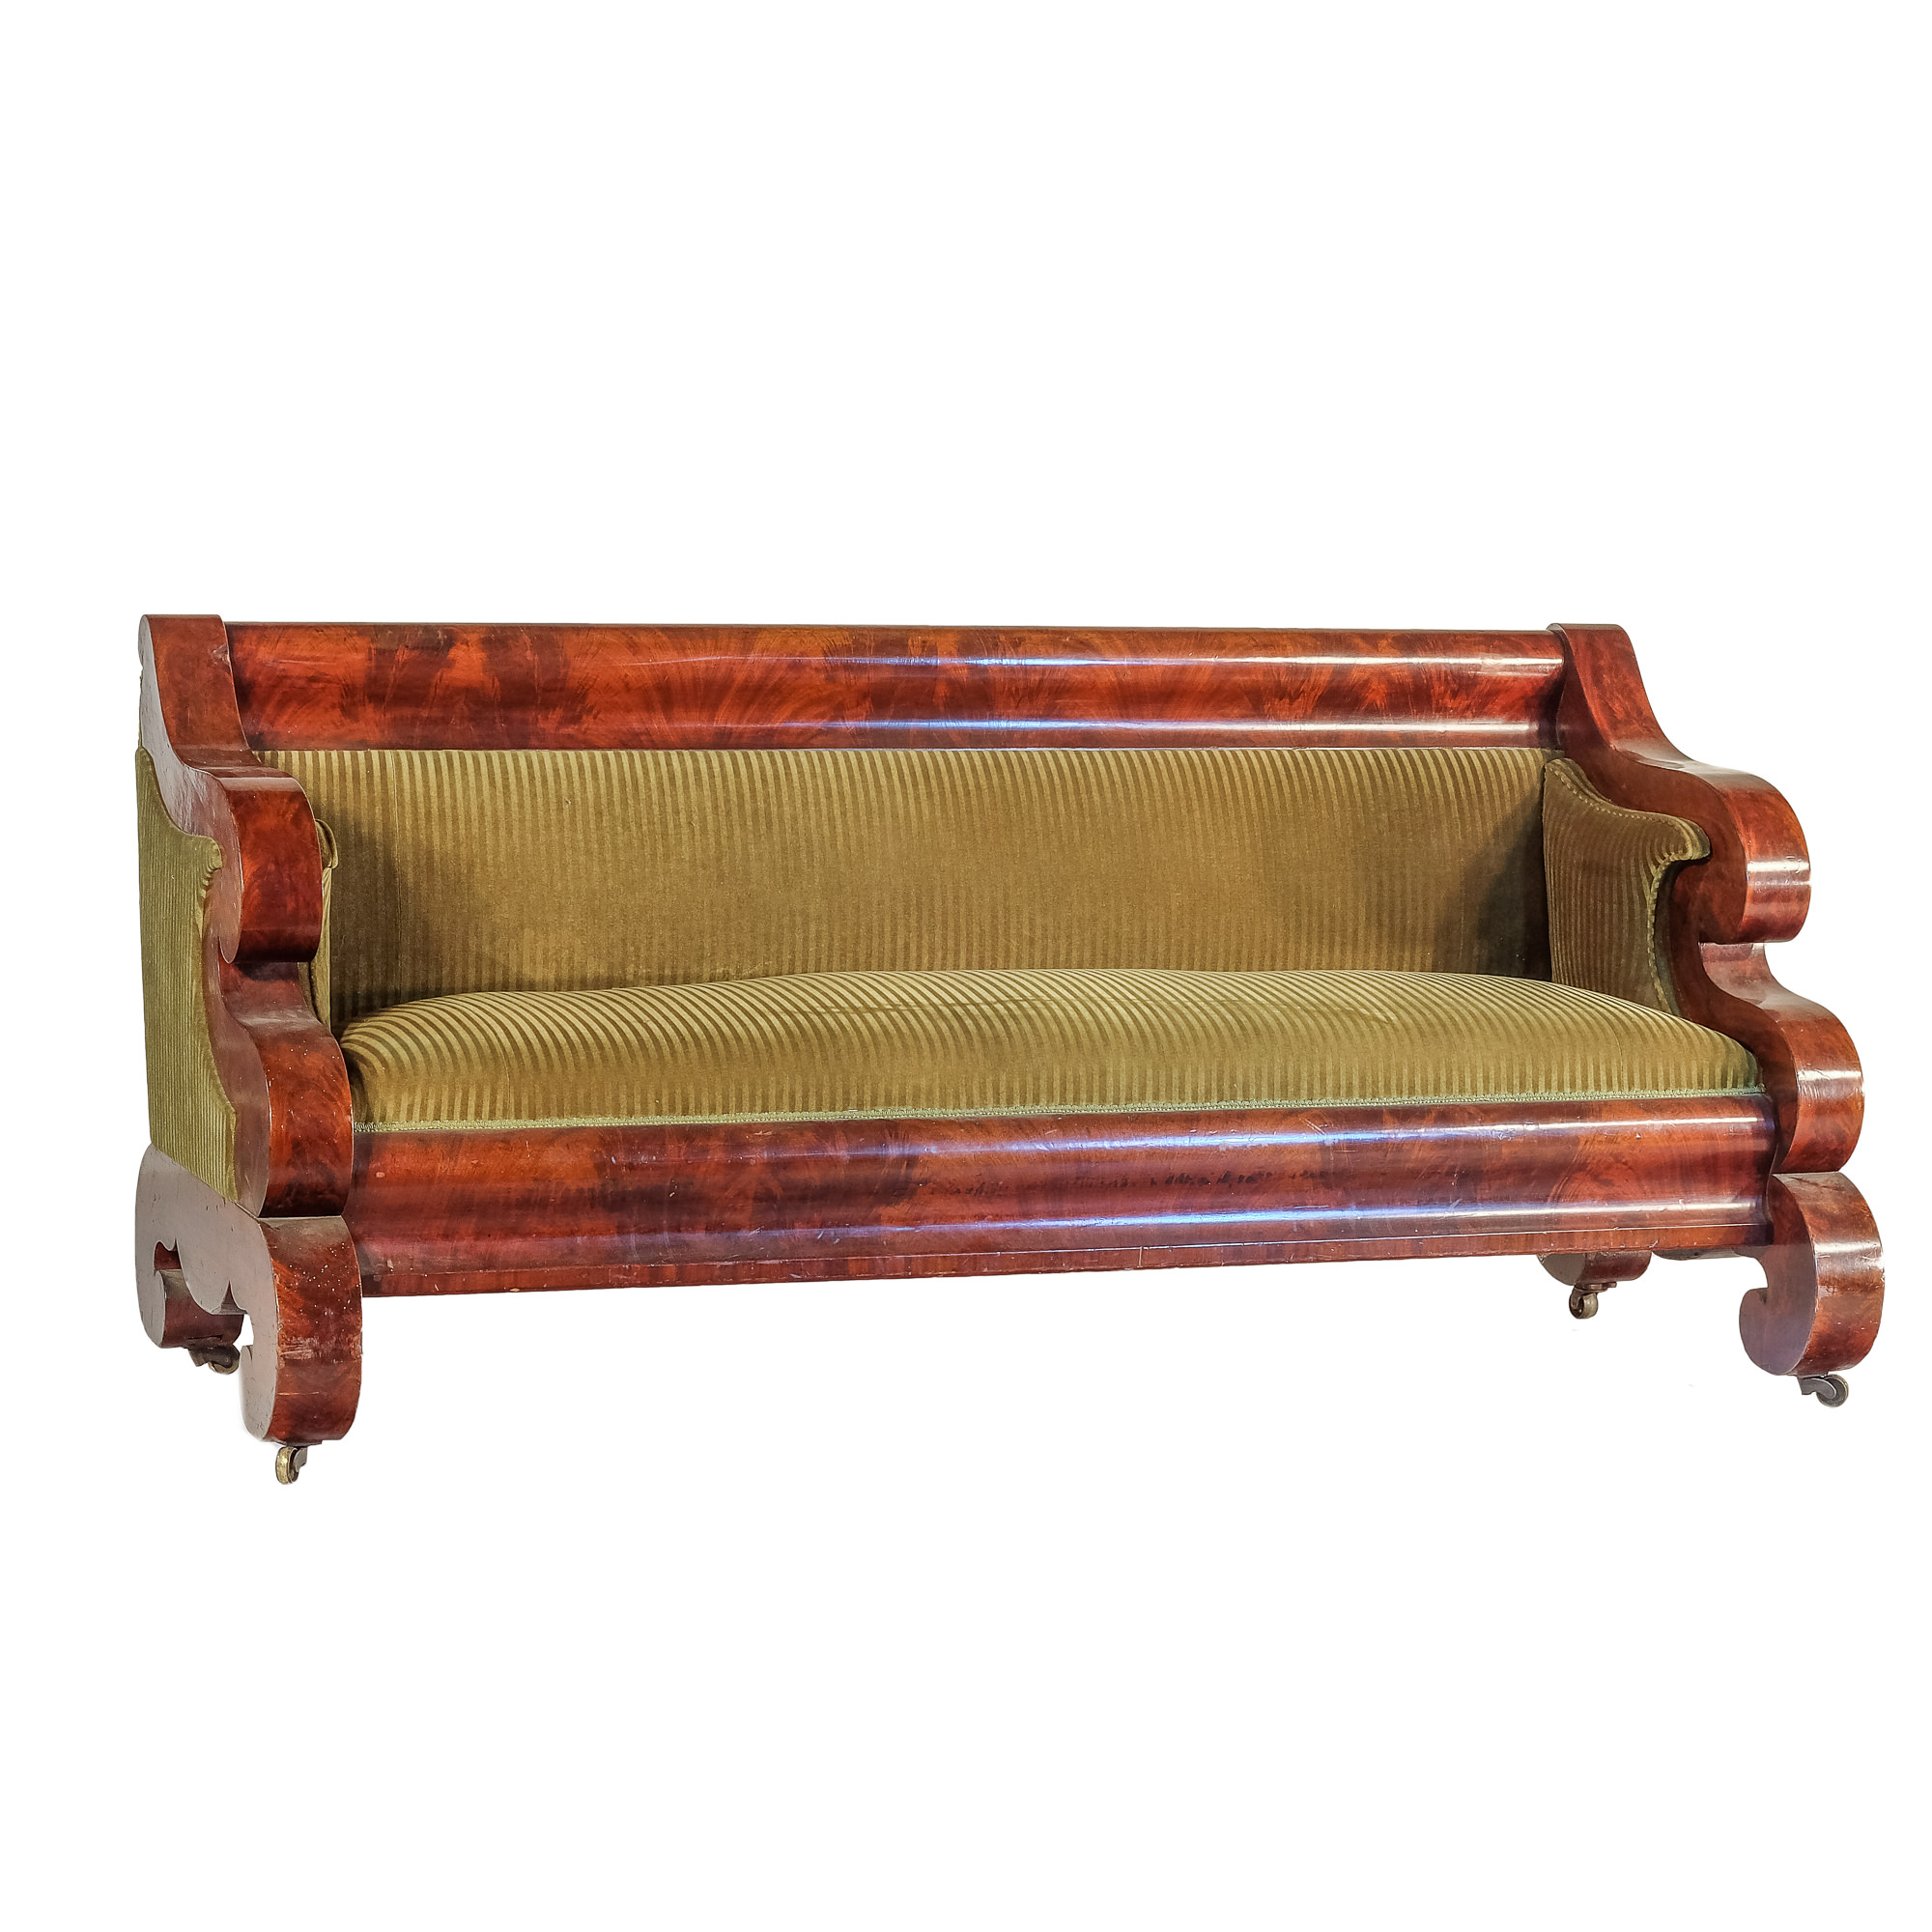 'Impressive Biedermeier Flame Mahogany Sofa Mid to Late 19th Century'